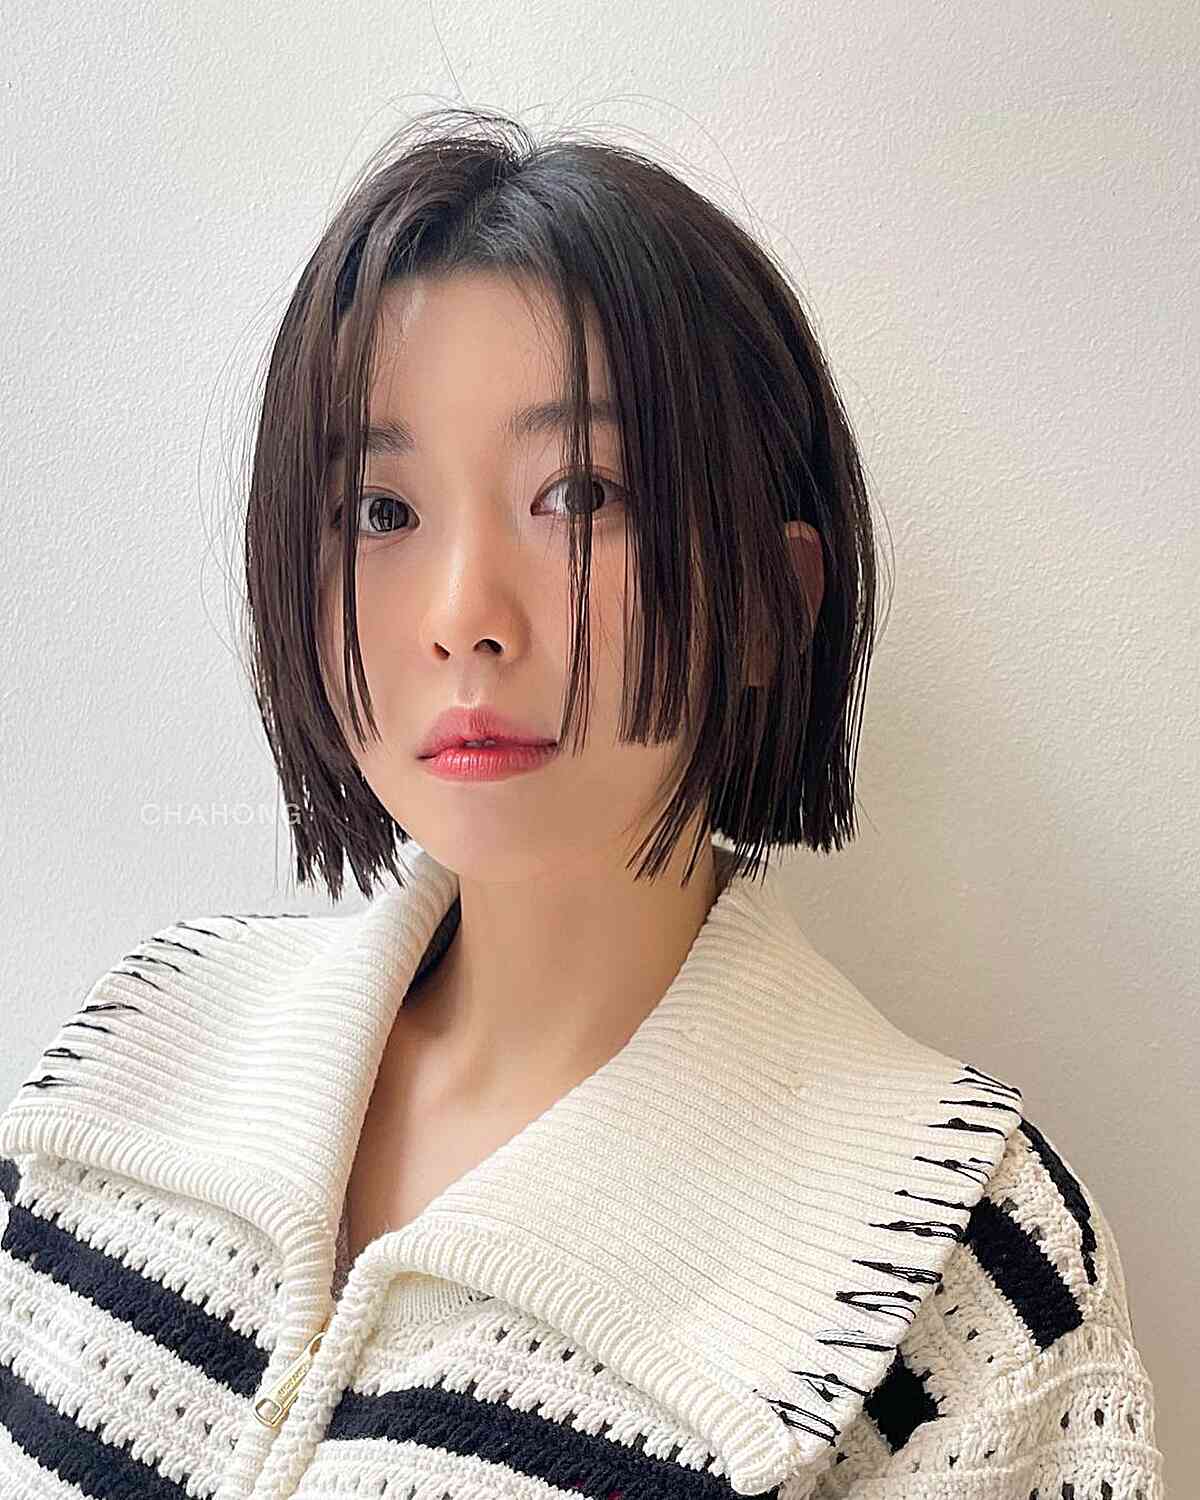 Sharp and short haircut for Asian girl